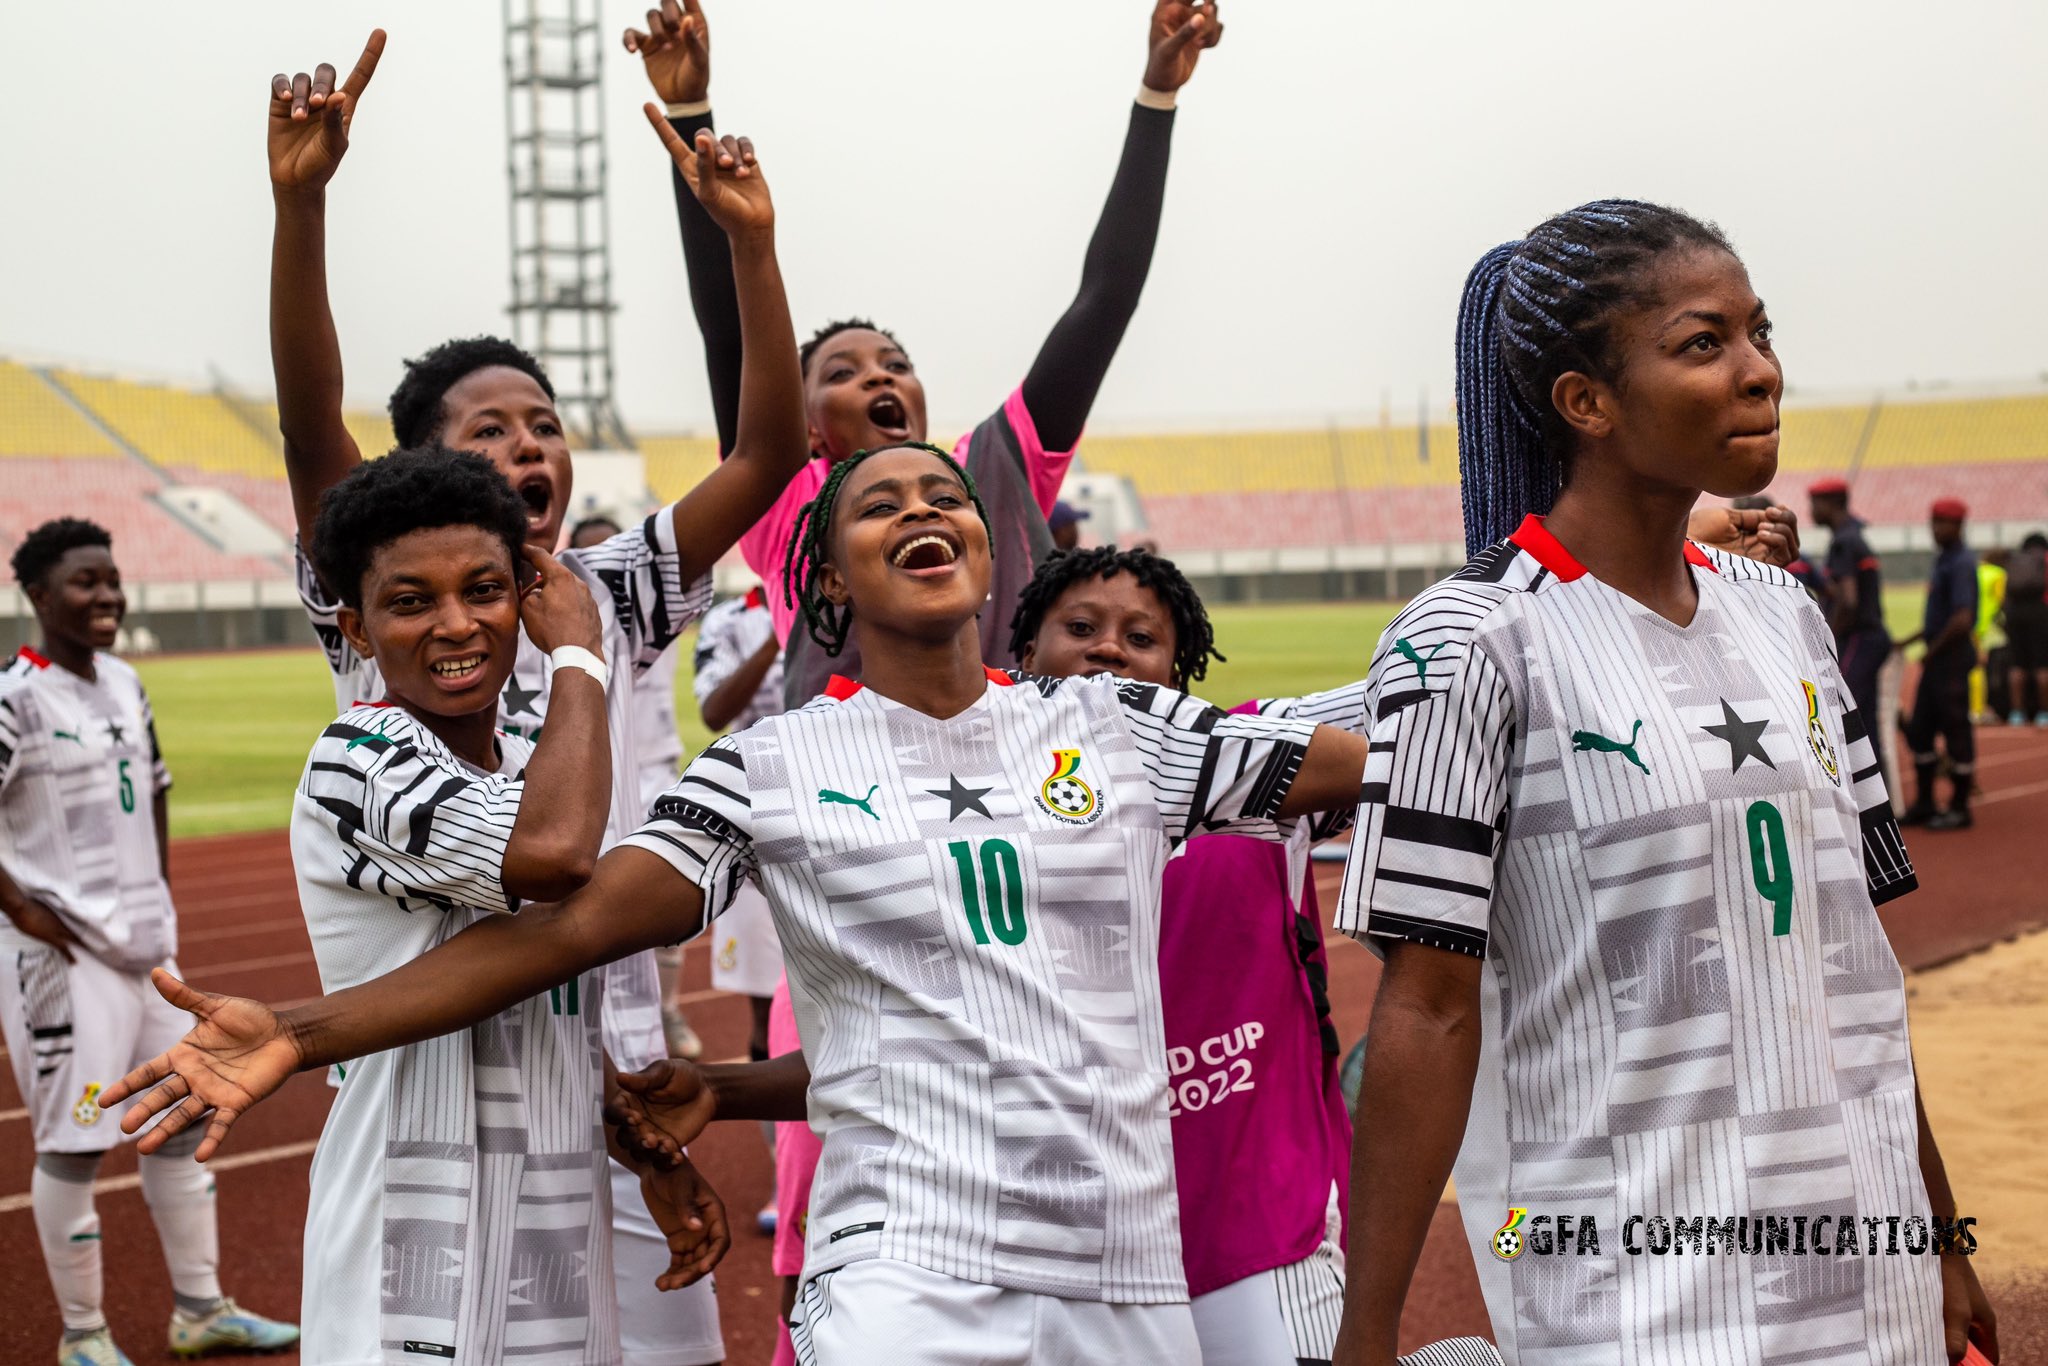 Match Report: Black Queens record impressive win over Benin to start Nora Hauptle era